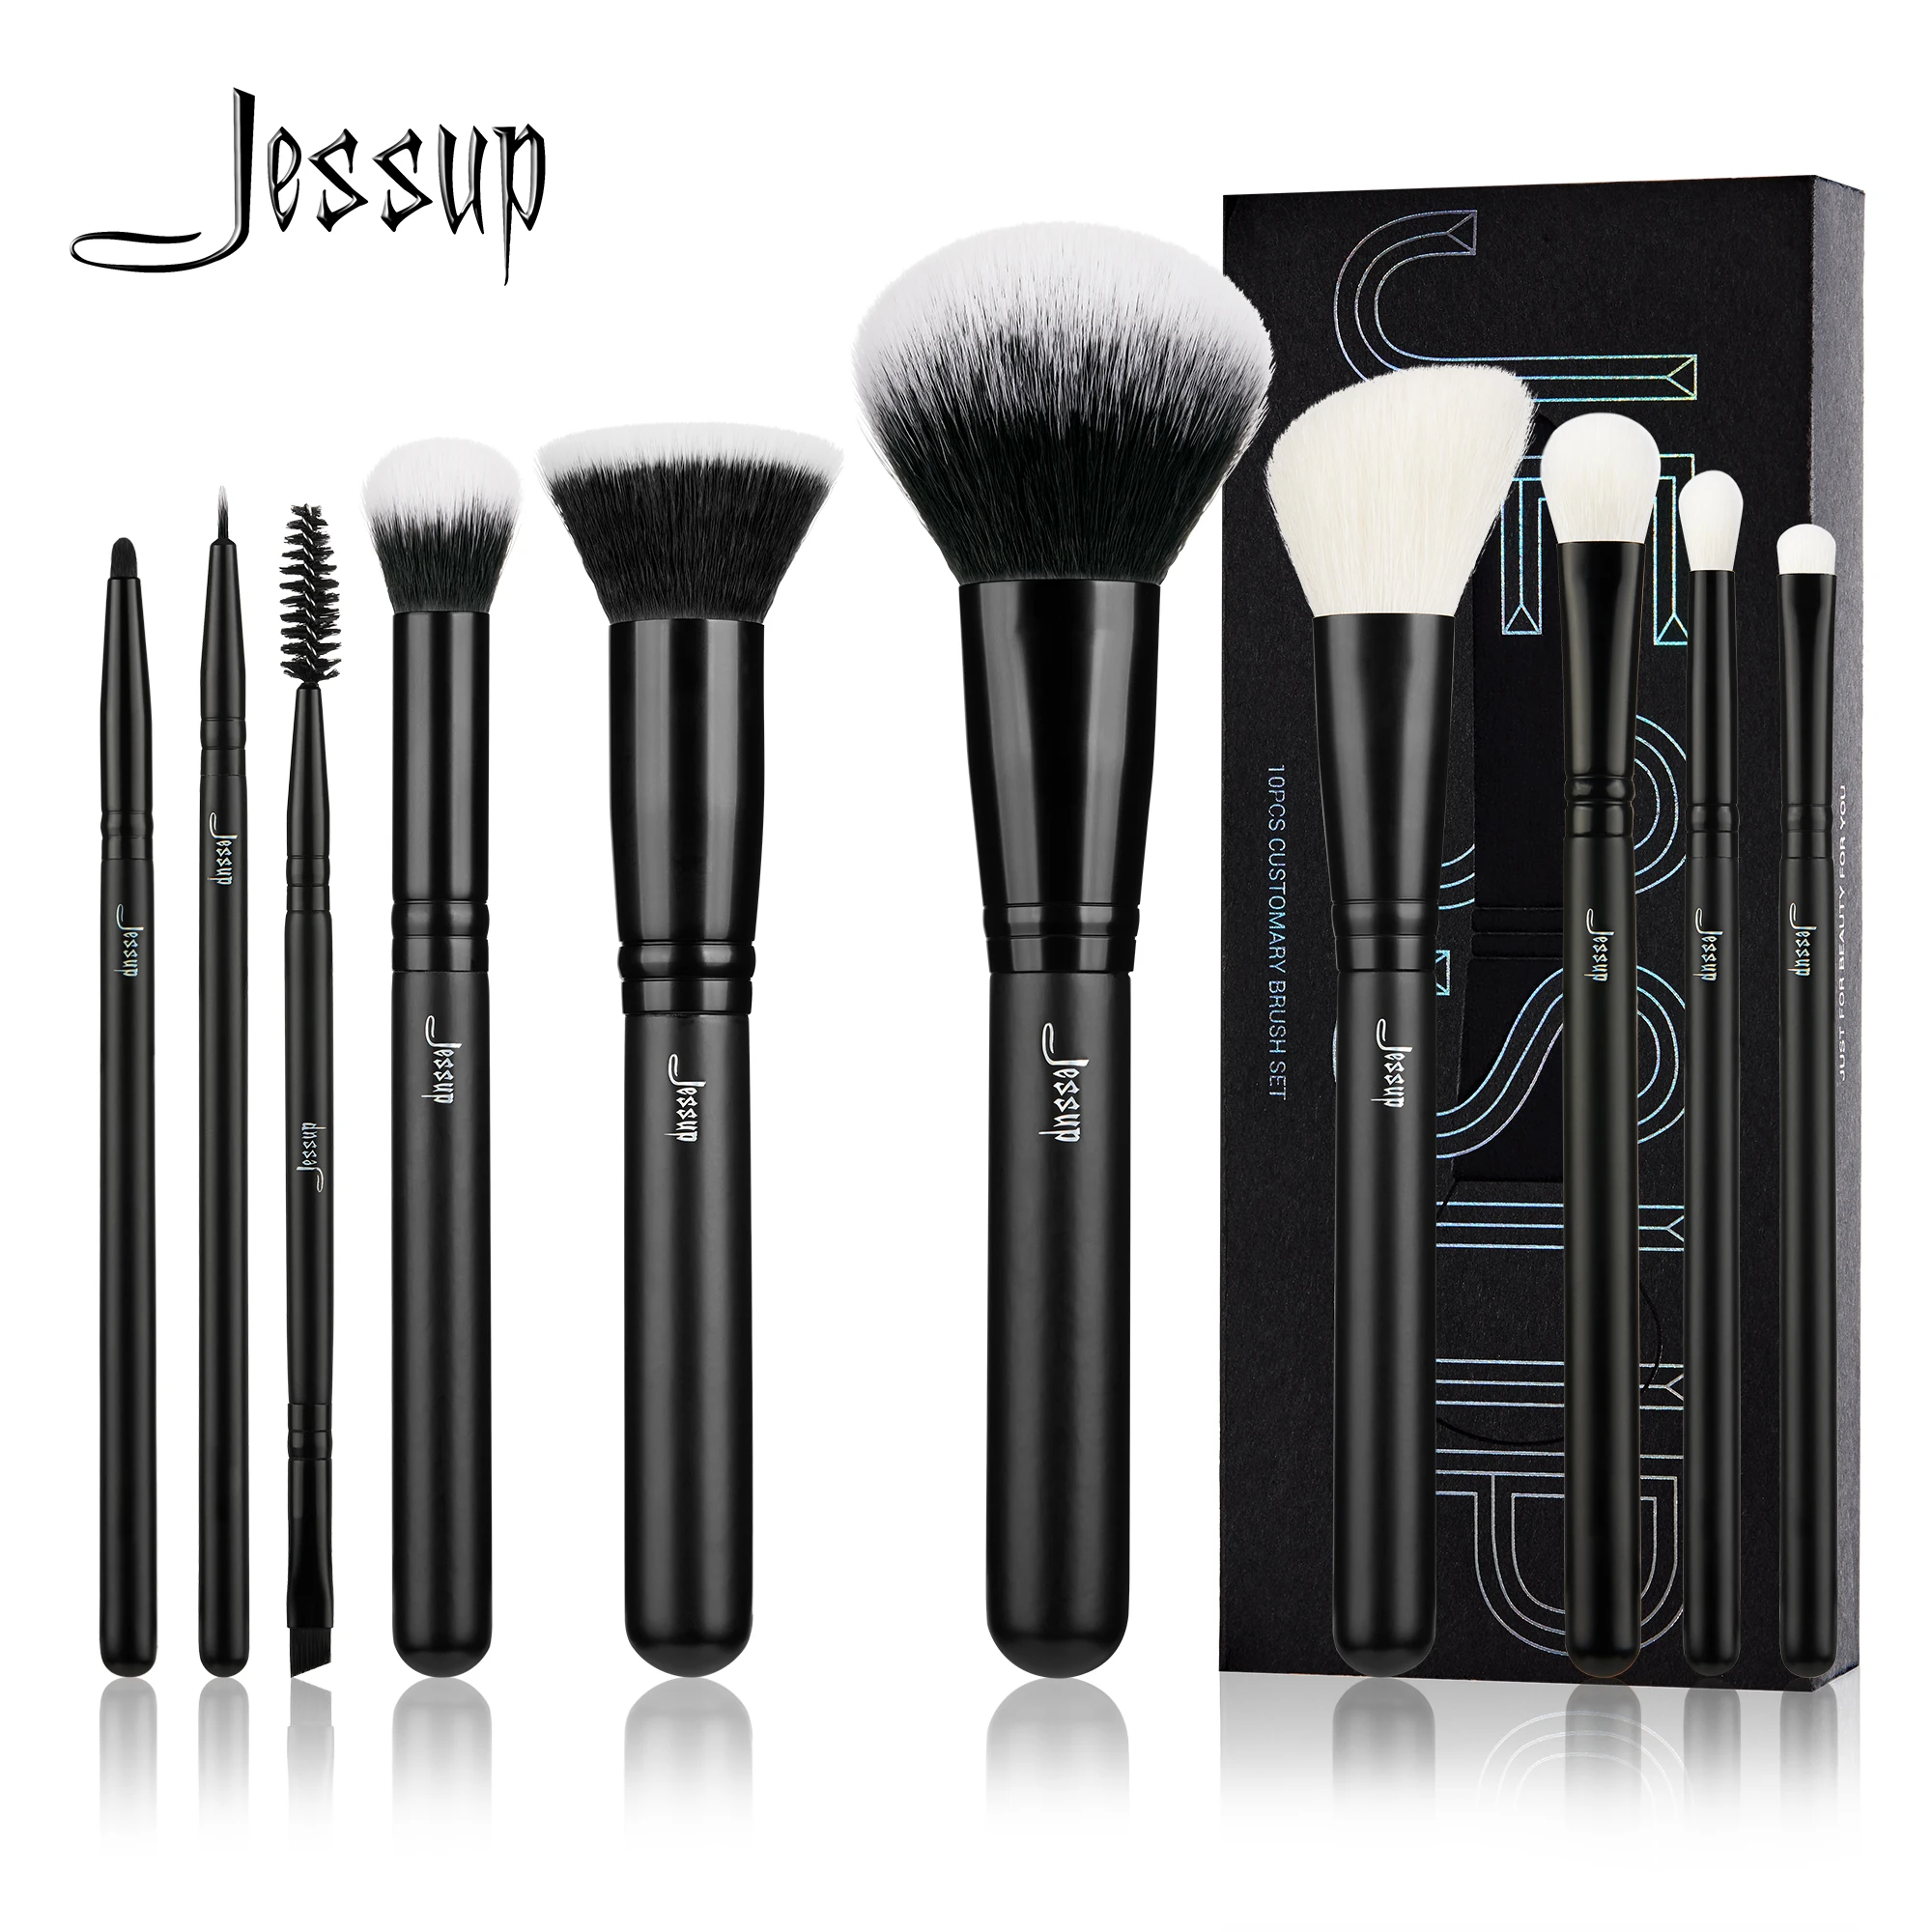 Jessup 10pcs Makeup Brushes Set Natural Synthetic Powder Foundation Eyeshadow Eyeliner Brush Concealer Blush Eyebrow Broach T323